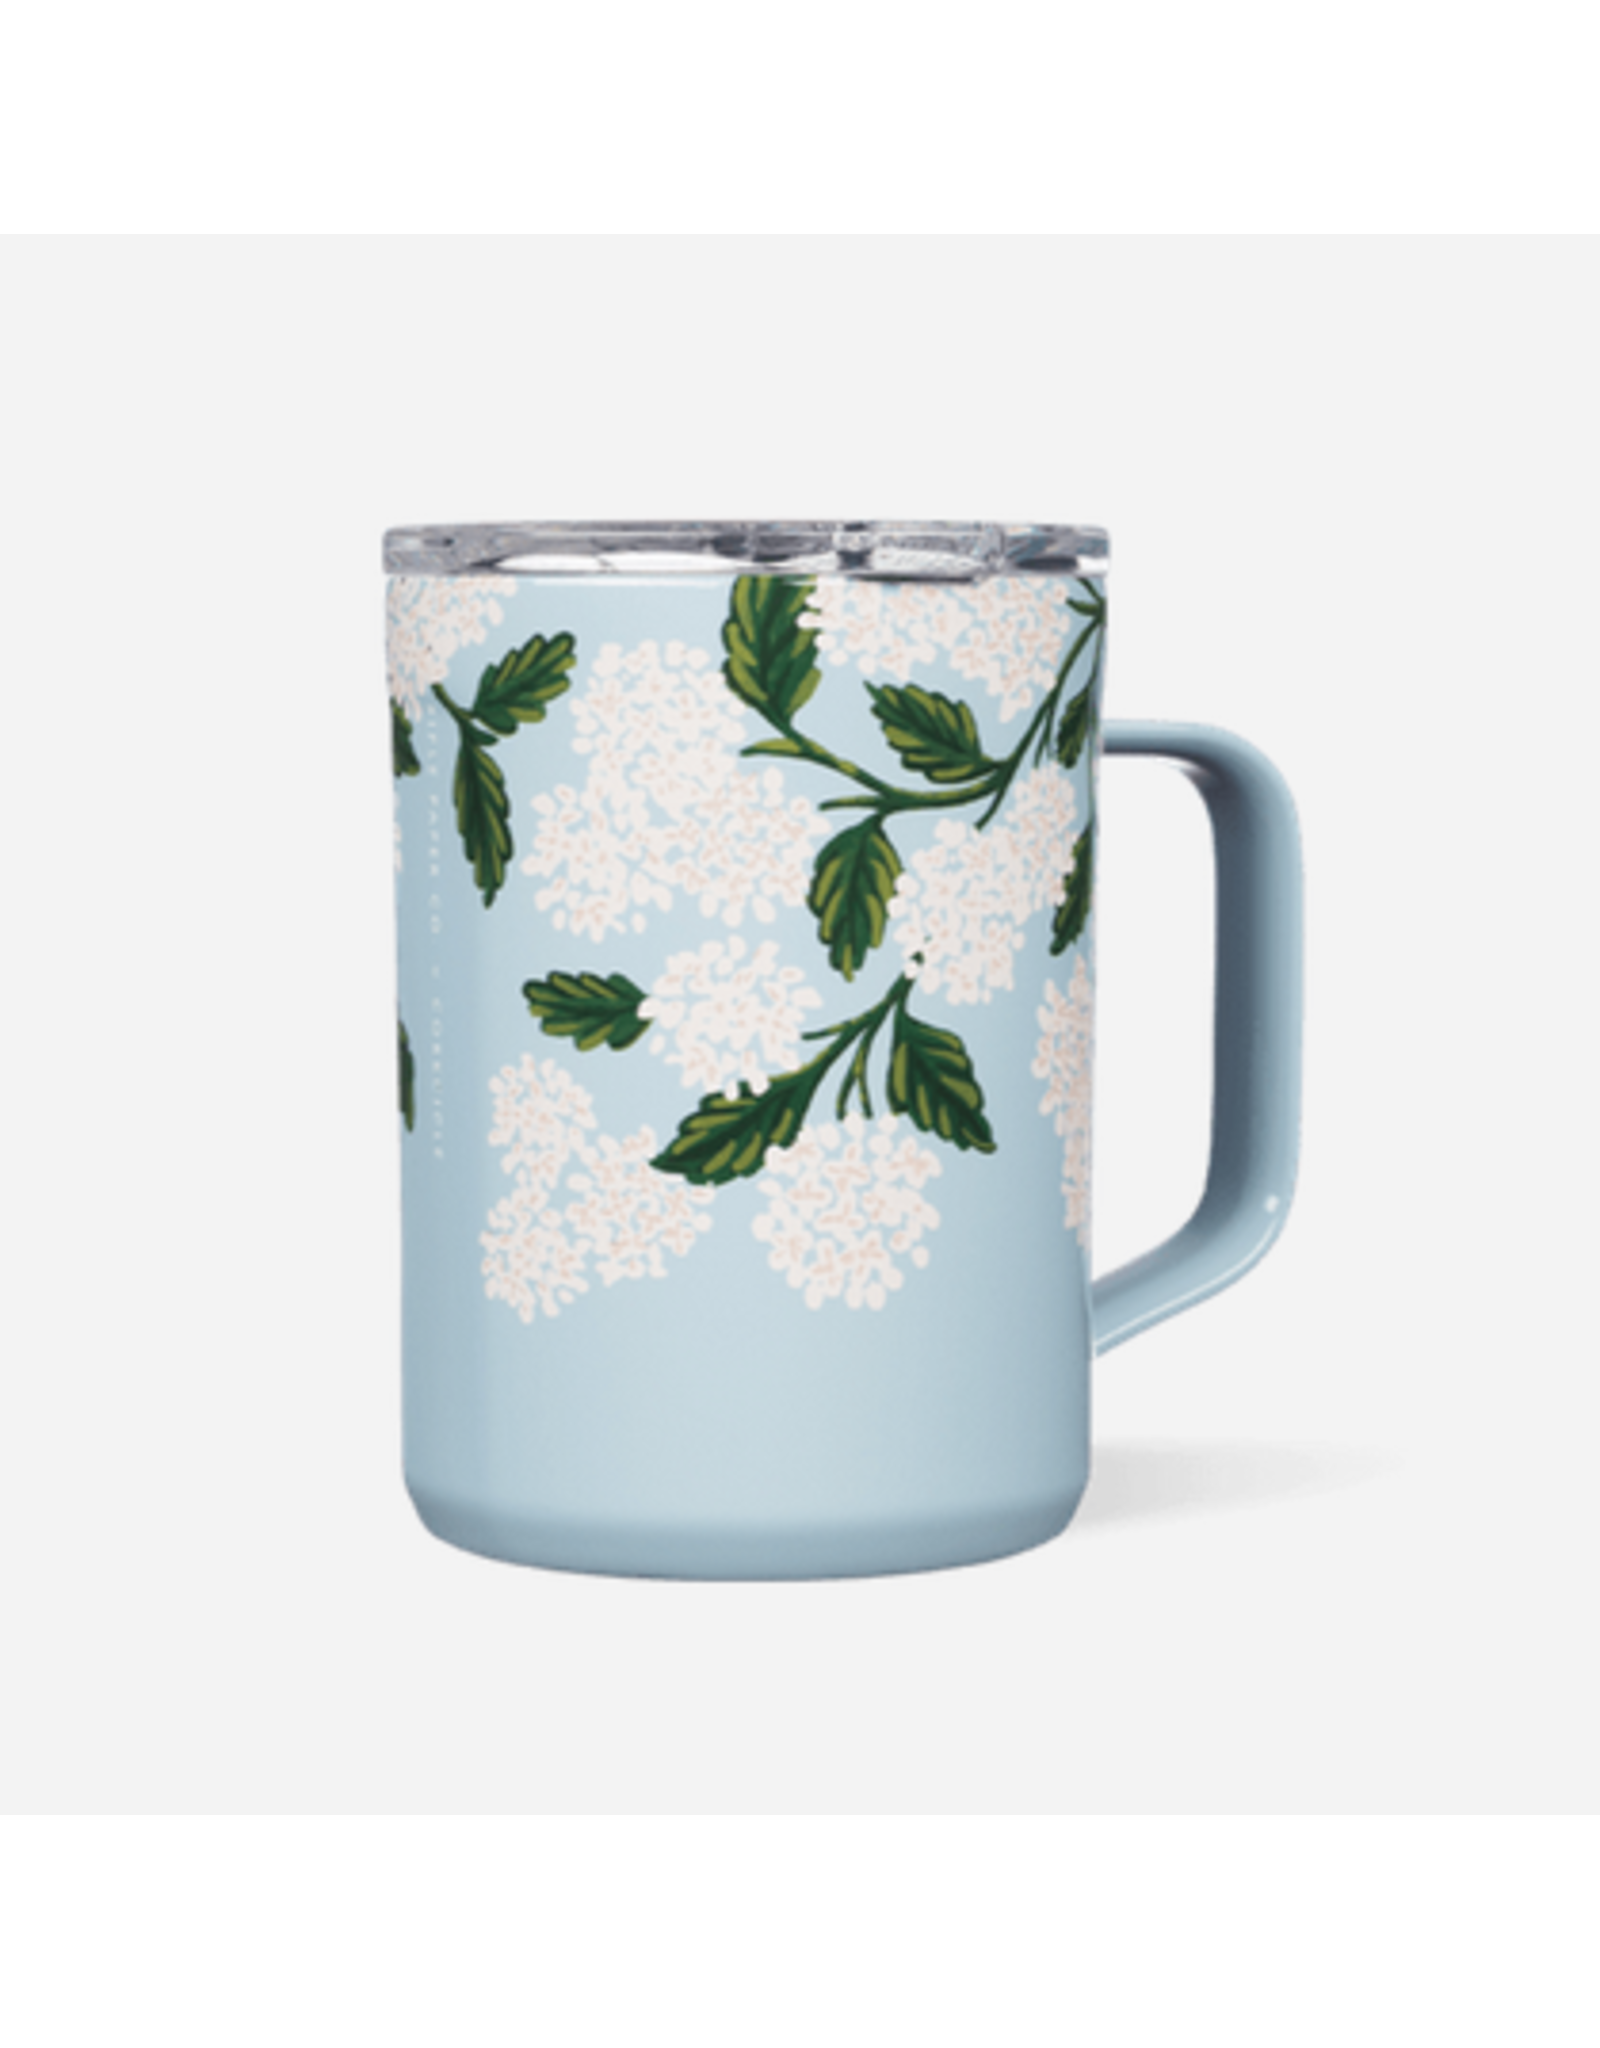 Corkcicle Coffee Mug 16oz in Gloss Blue Hydrangea